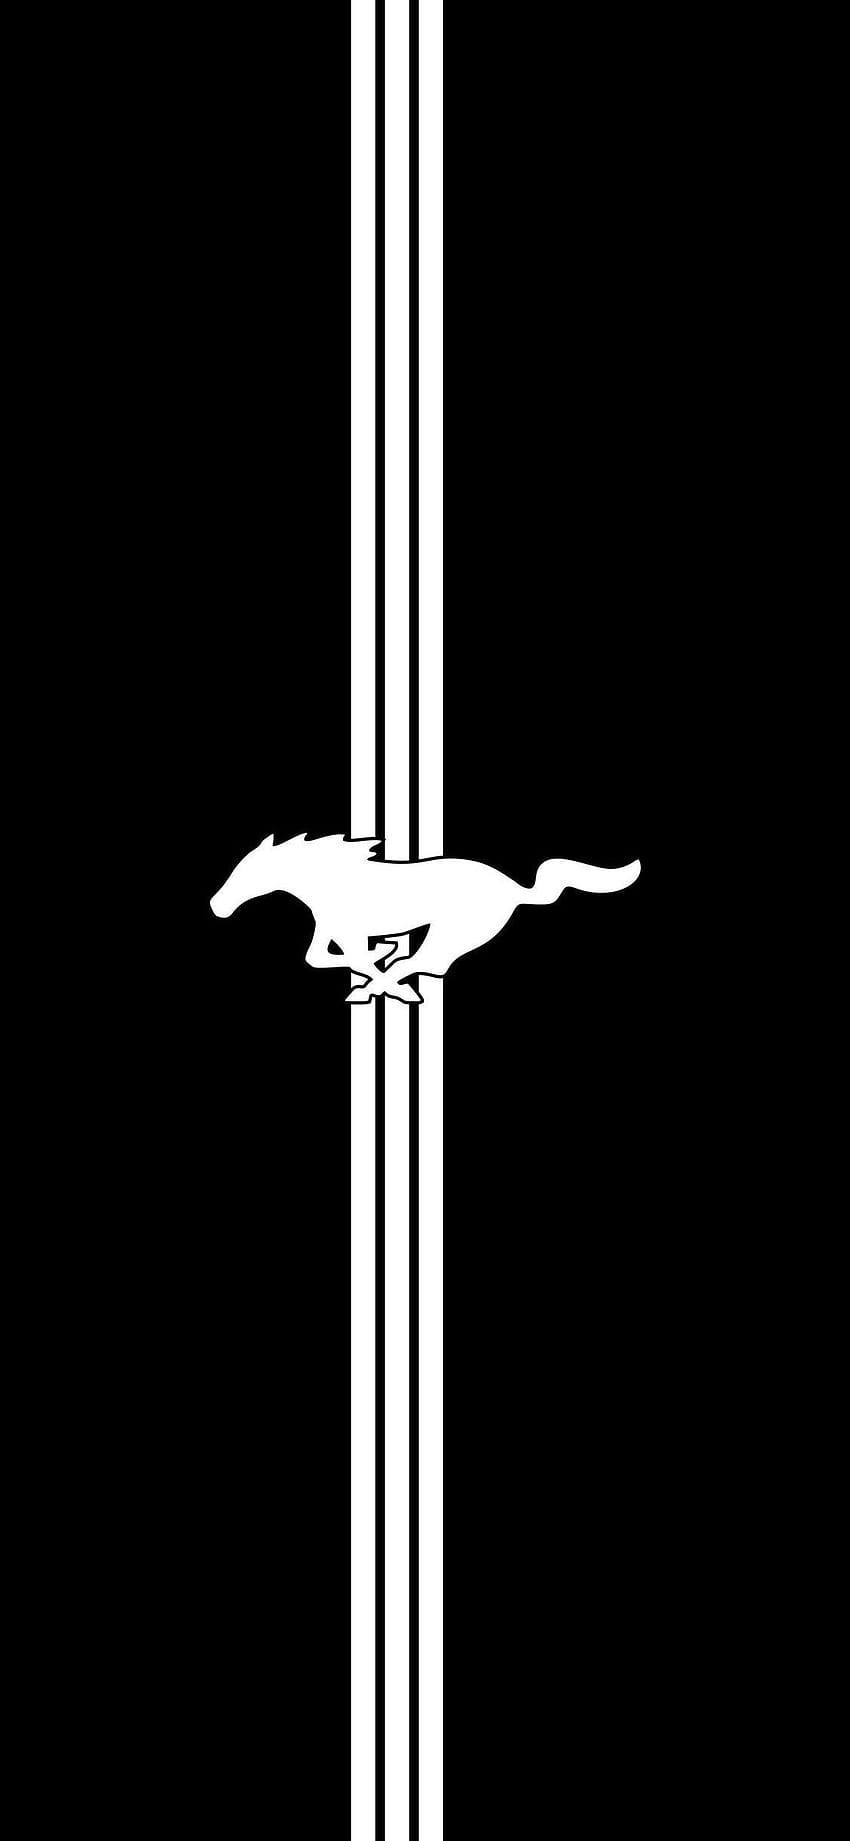 iPhone z logo Forda Mustanga, emblemat Mustanga Tapeta na telefon HD